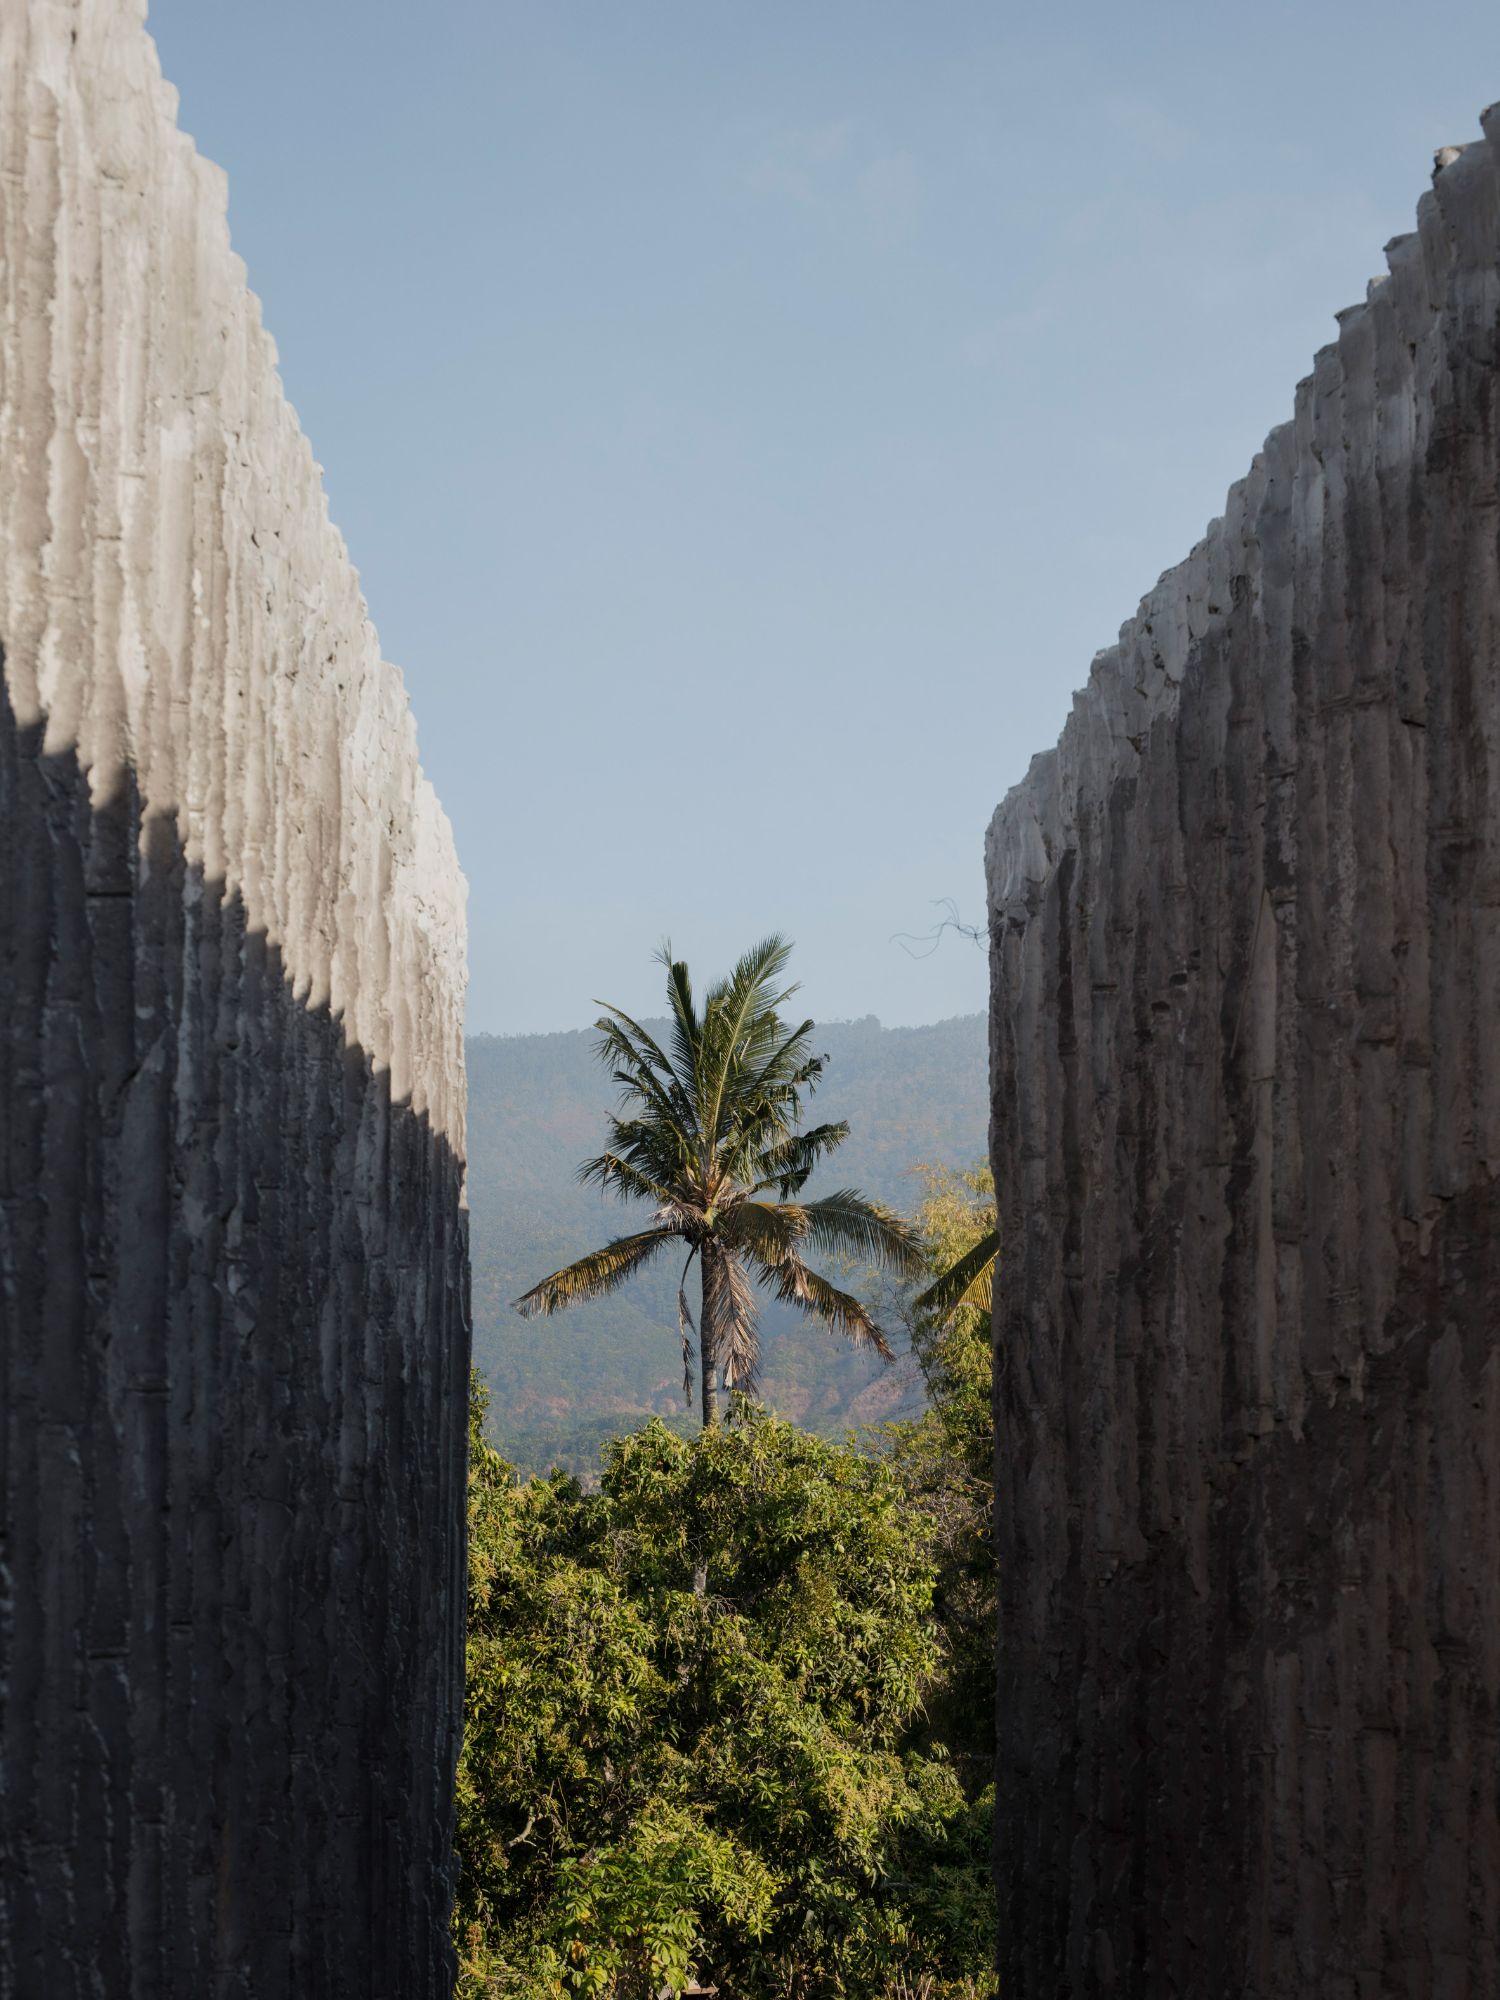 The Tiing Tejakula Villas in Bali by Nic Brunsdon + Manguning